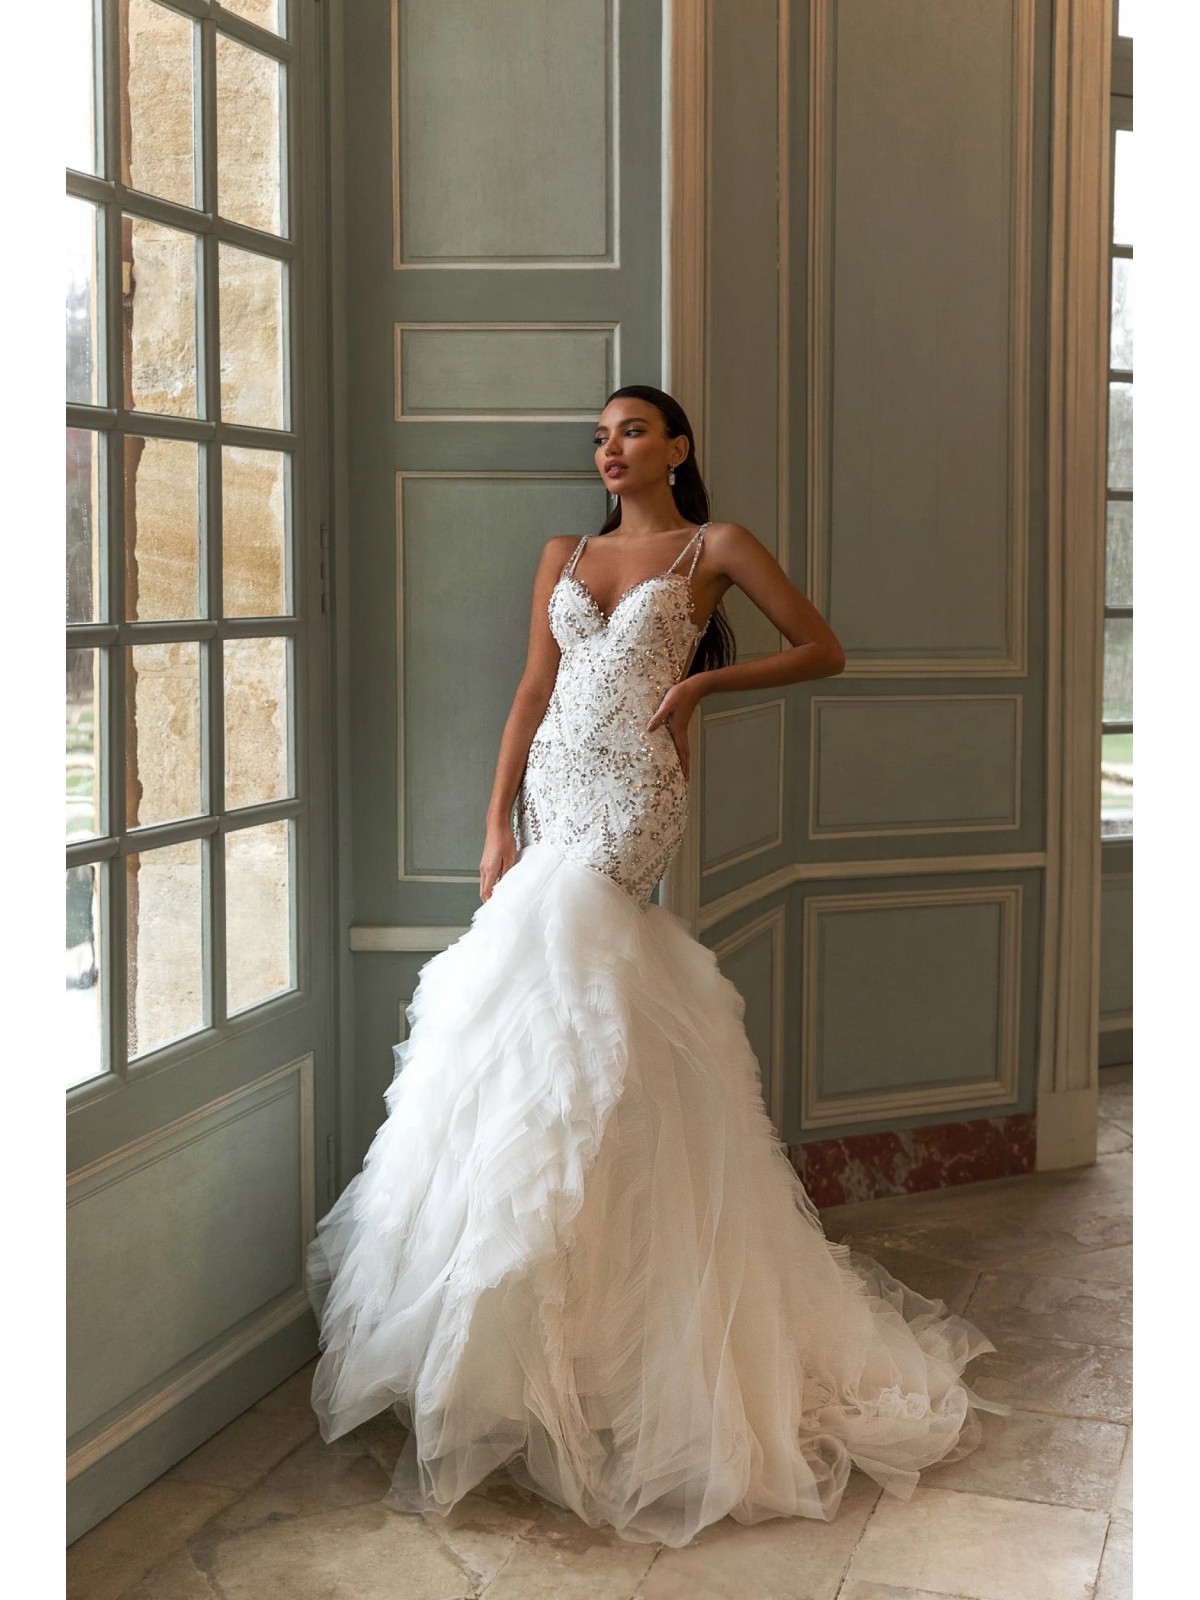 Luxury Wedding Dress - Flamboyance - LPLD-3206.00.17